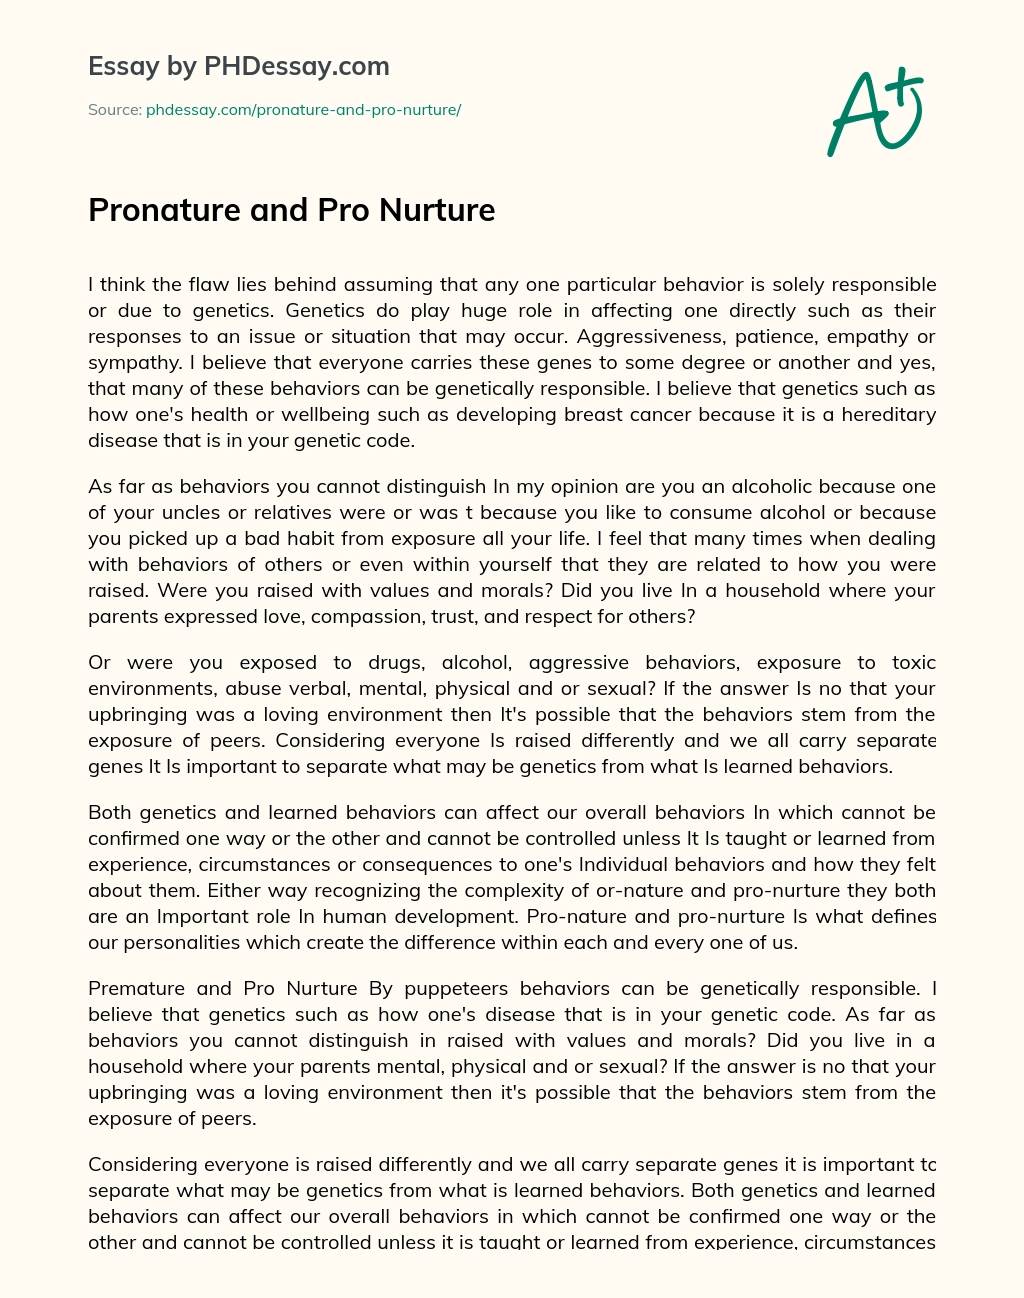 Pronature and Pro Nurture essay